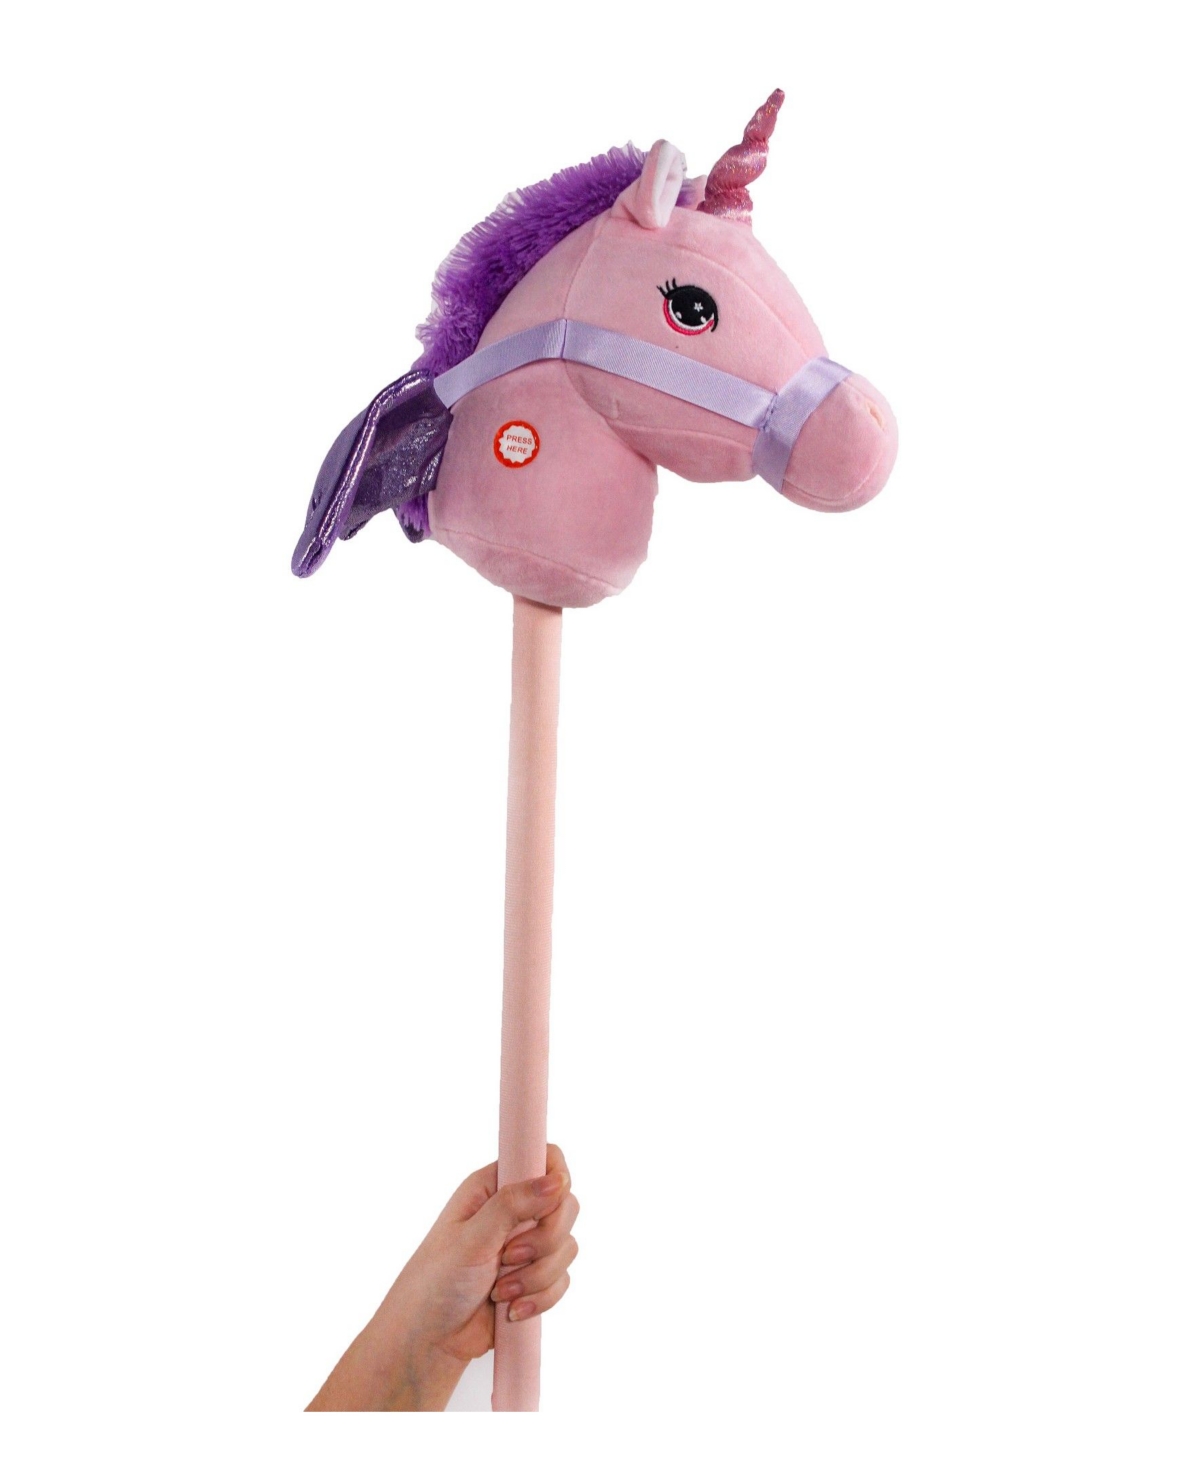 First & Main Ponyland Giddy-up Fantasy 28" Stick Horse Plush, Unicorn With Sound In Multi